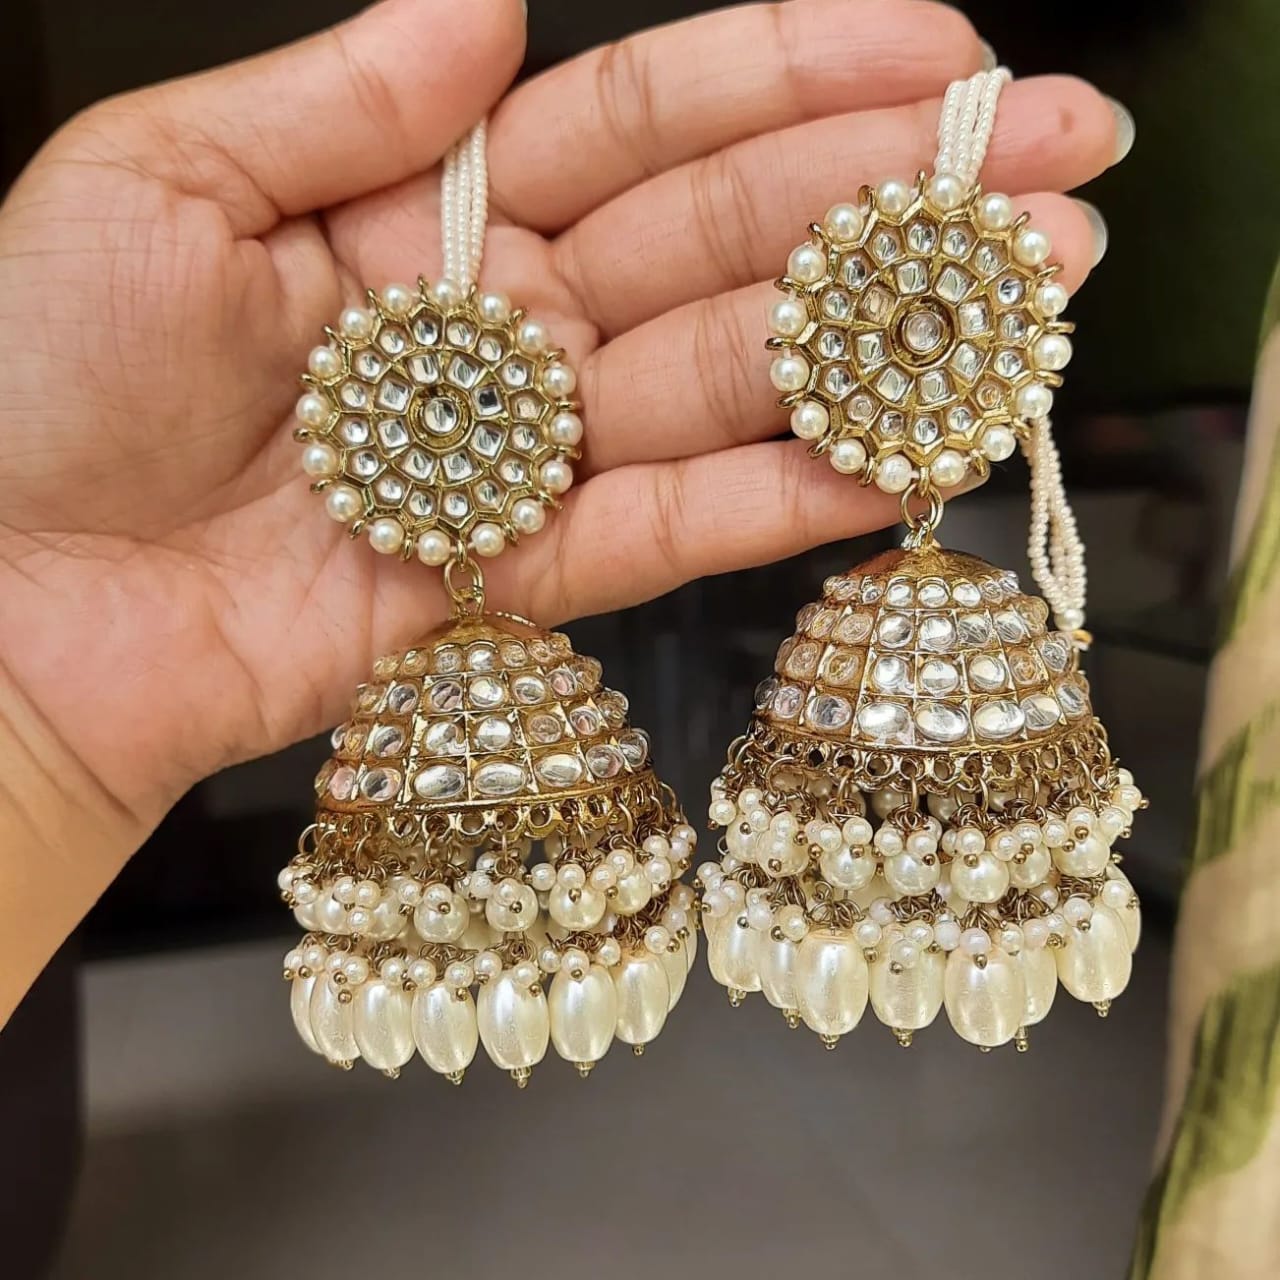 Oversized kundan jhumki with saharas/ jhumki style earrings with saharas